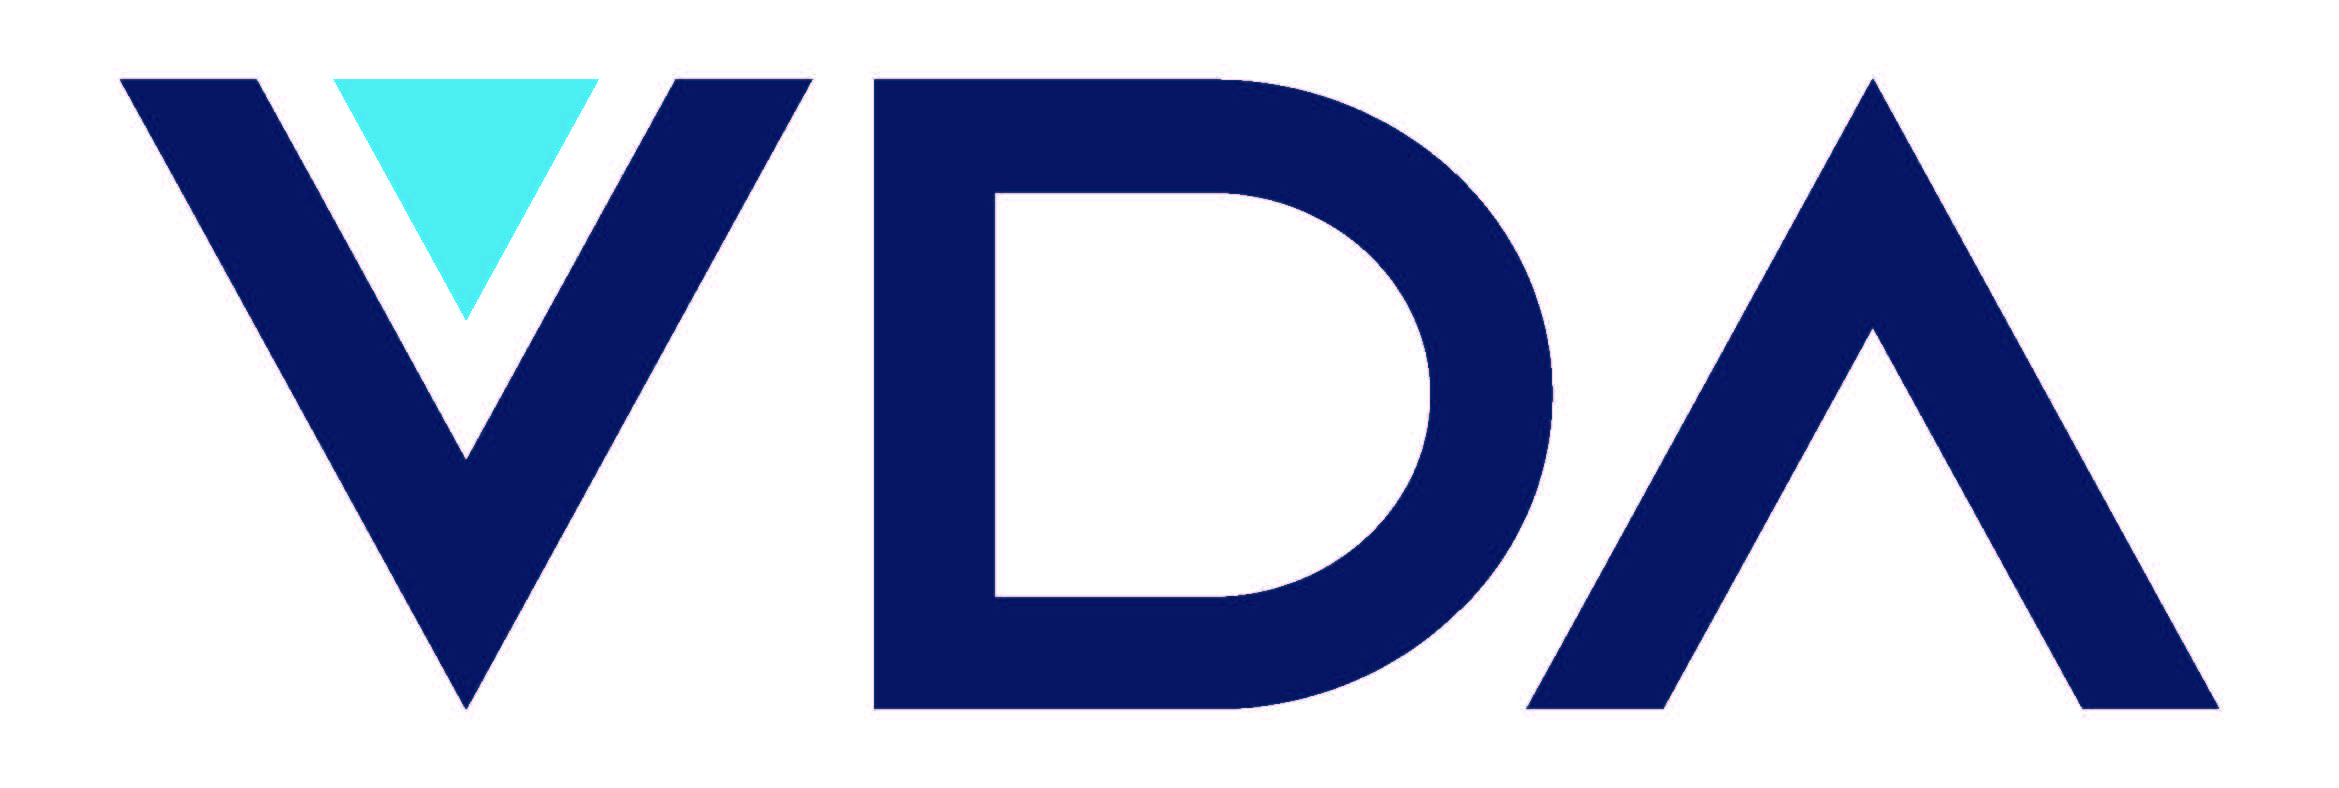 vda logo